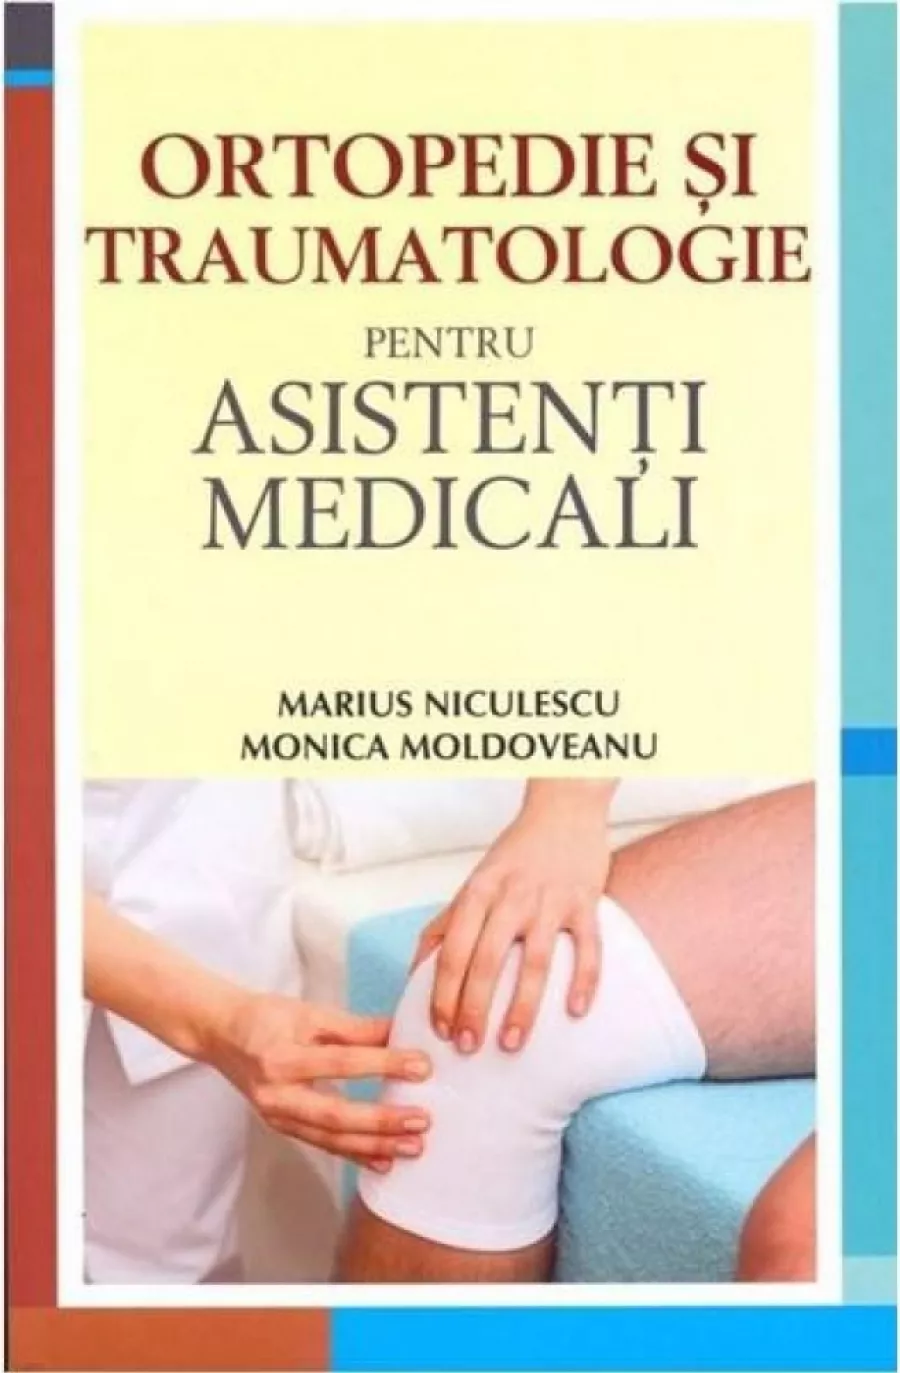 Ortopedie și traumatologie | Spitalul Monza